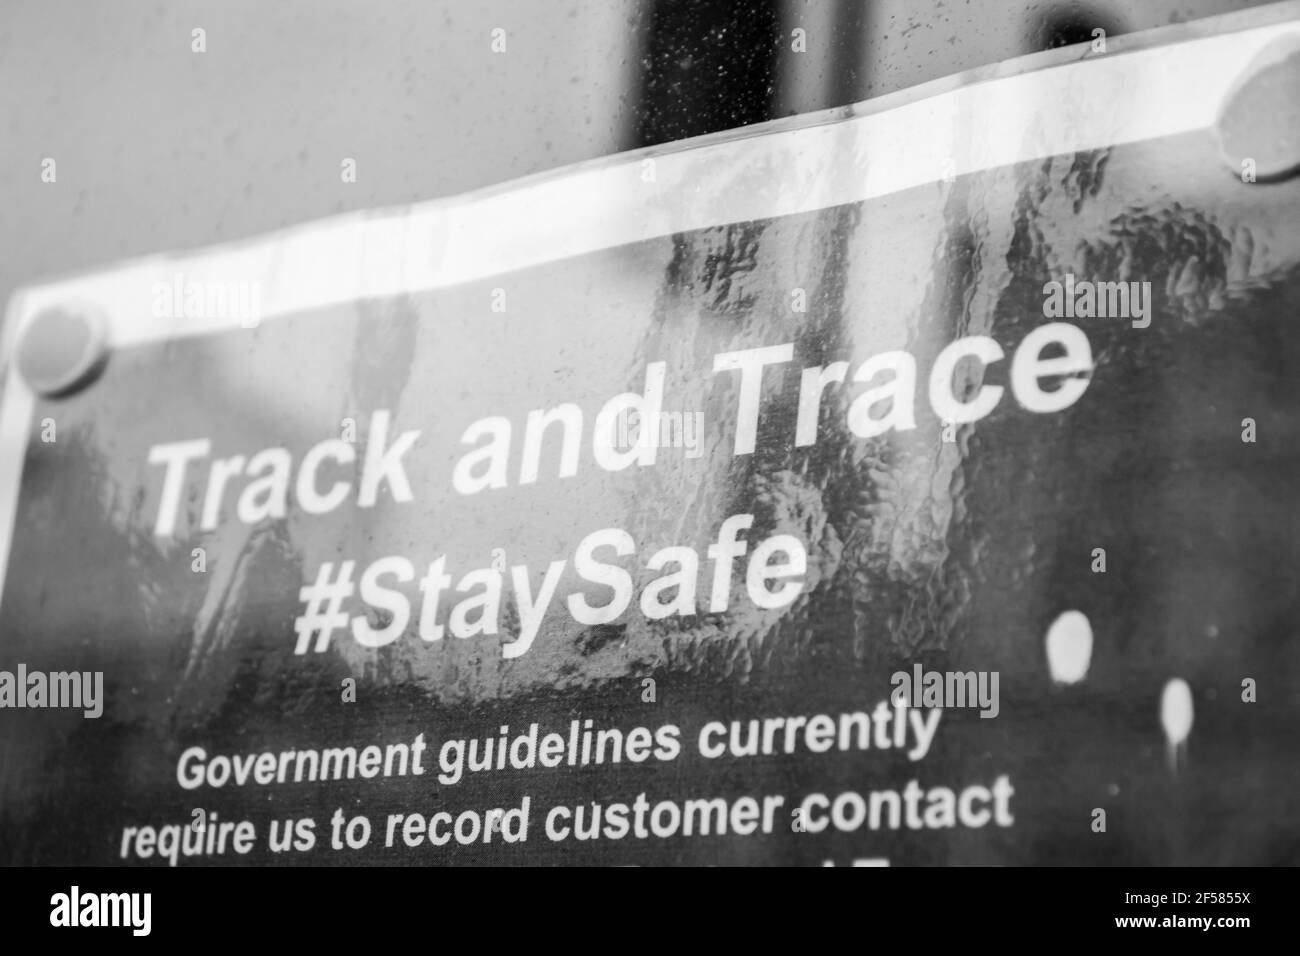 Track and Trace #StaySafe Poster in einem Schaufenster Stockfoto